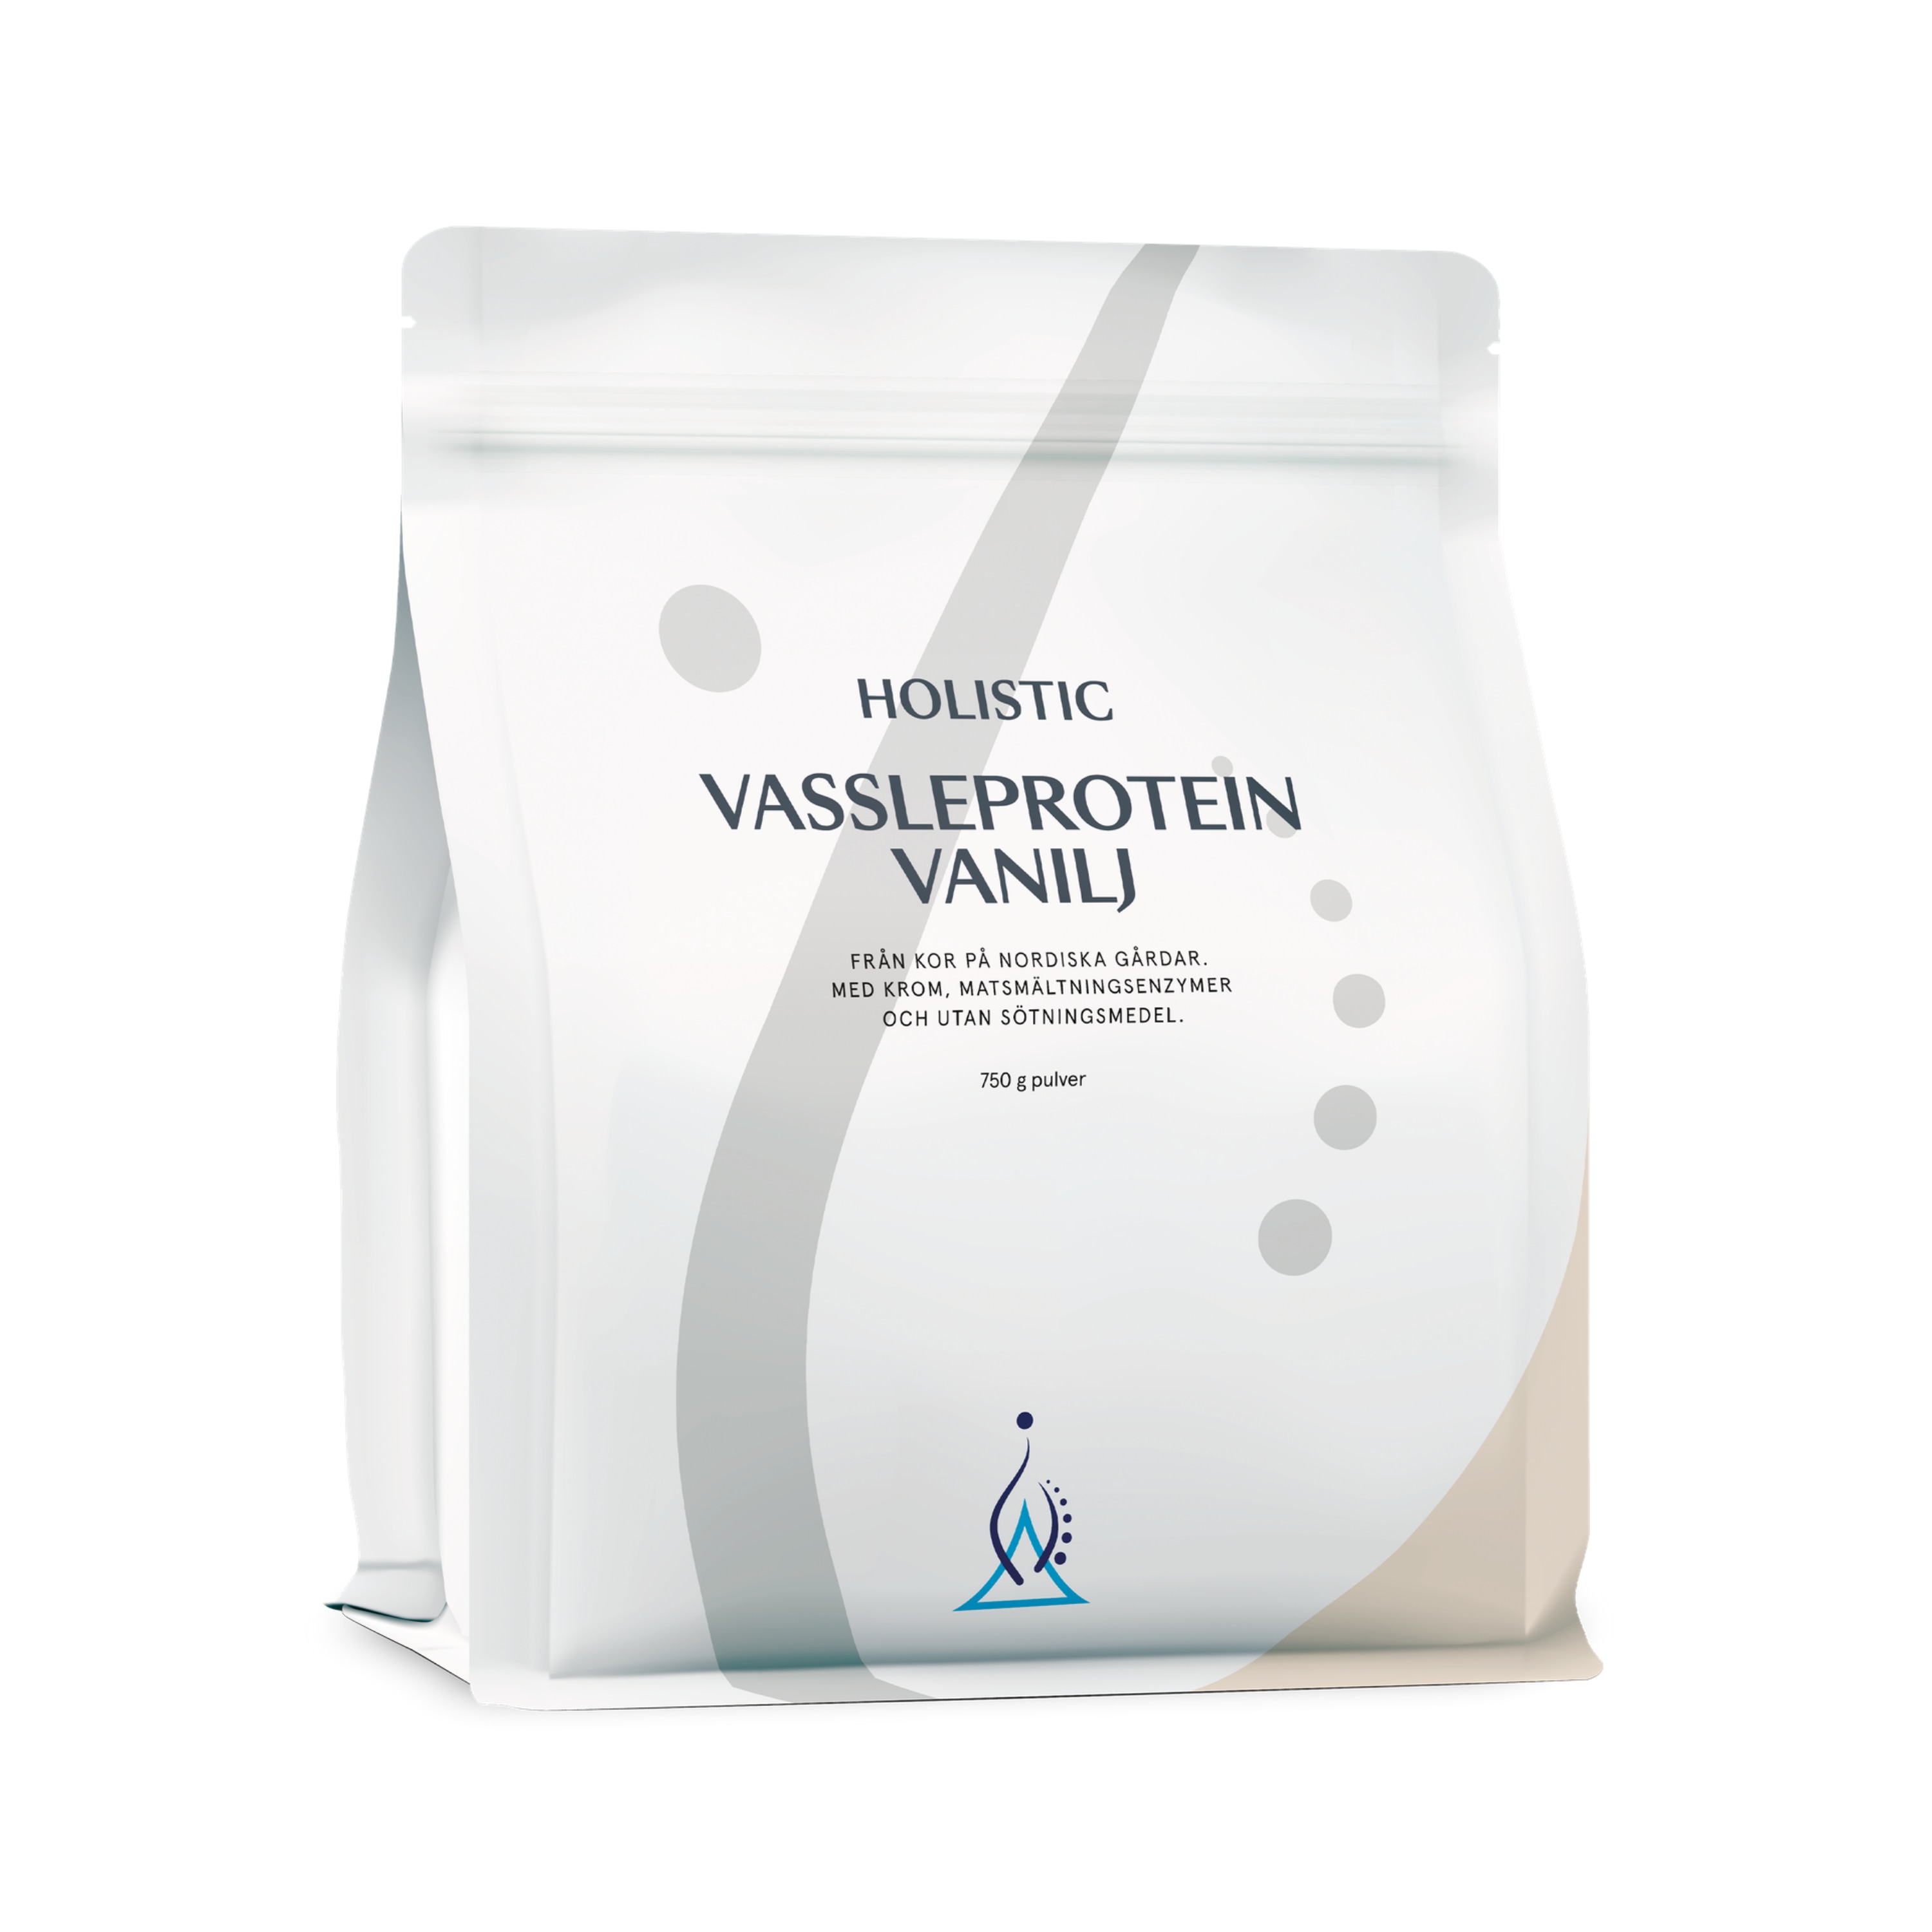 Vassleprotein Vanilj 750g